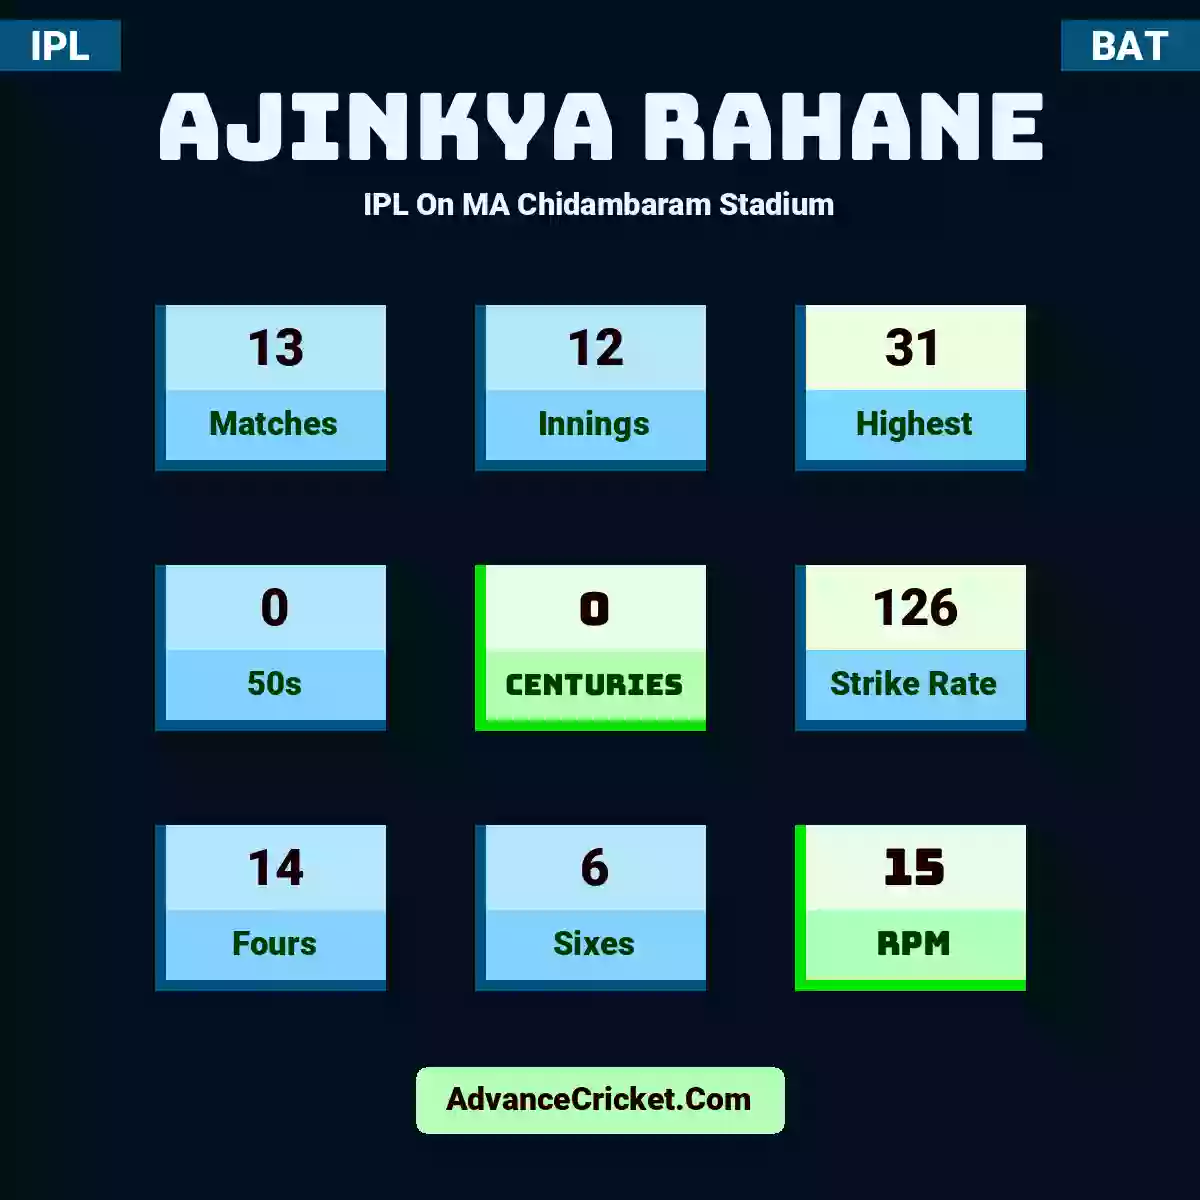 Ajinkya Rahane IPL  On MA Chidambaram Stadium, Ajinkya Rahane played 13 matches, scored 31 runs as highest, 0 half-centuries, and 0 centuries, with a strike rate of 126. A.Rahane hit 14 fours and 6 sixes, with an RPM of 15.